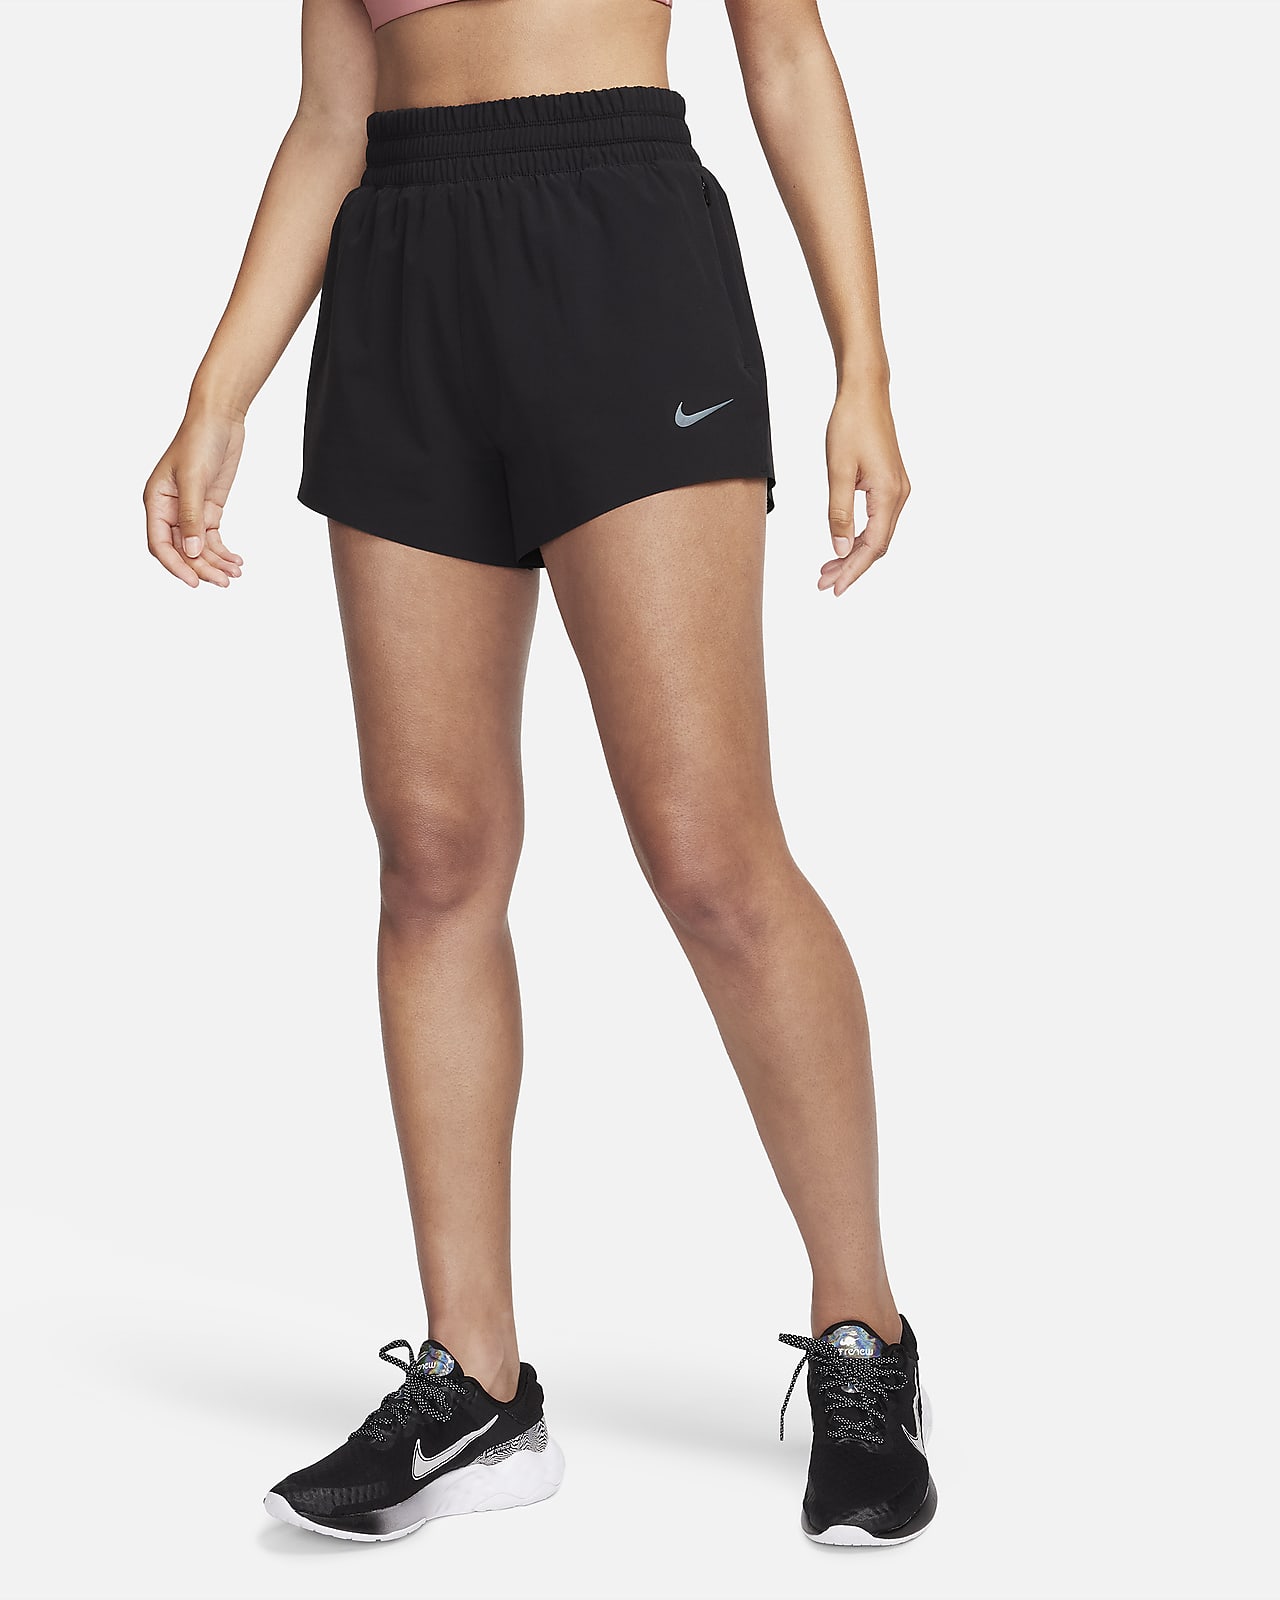 Women's 2 in 1 Short Nike One Dri-Fit MR 3  - Shorts - Textile - Handball  wear